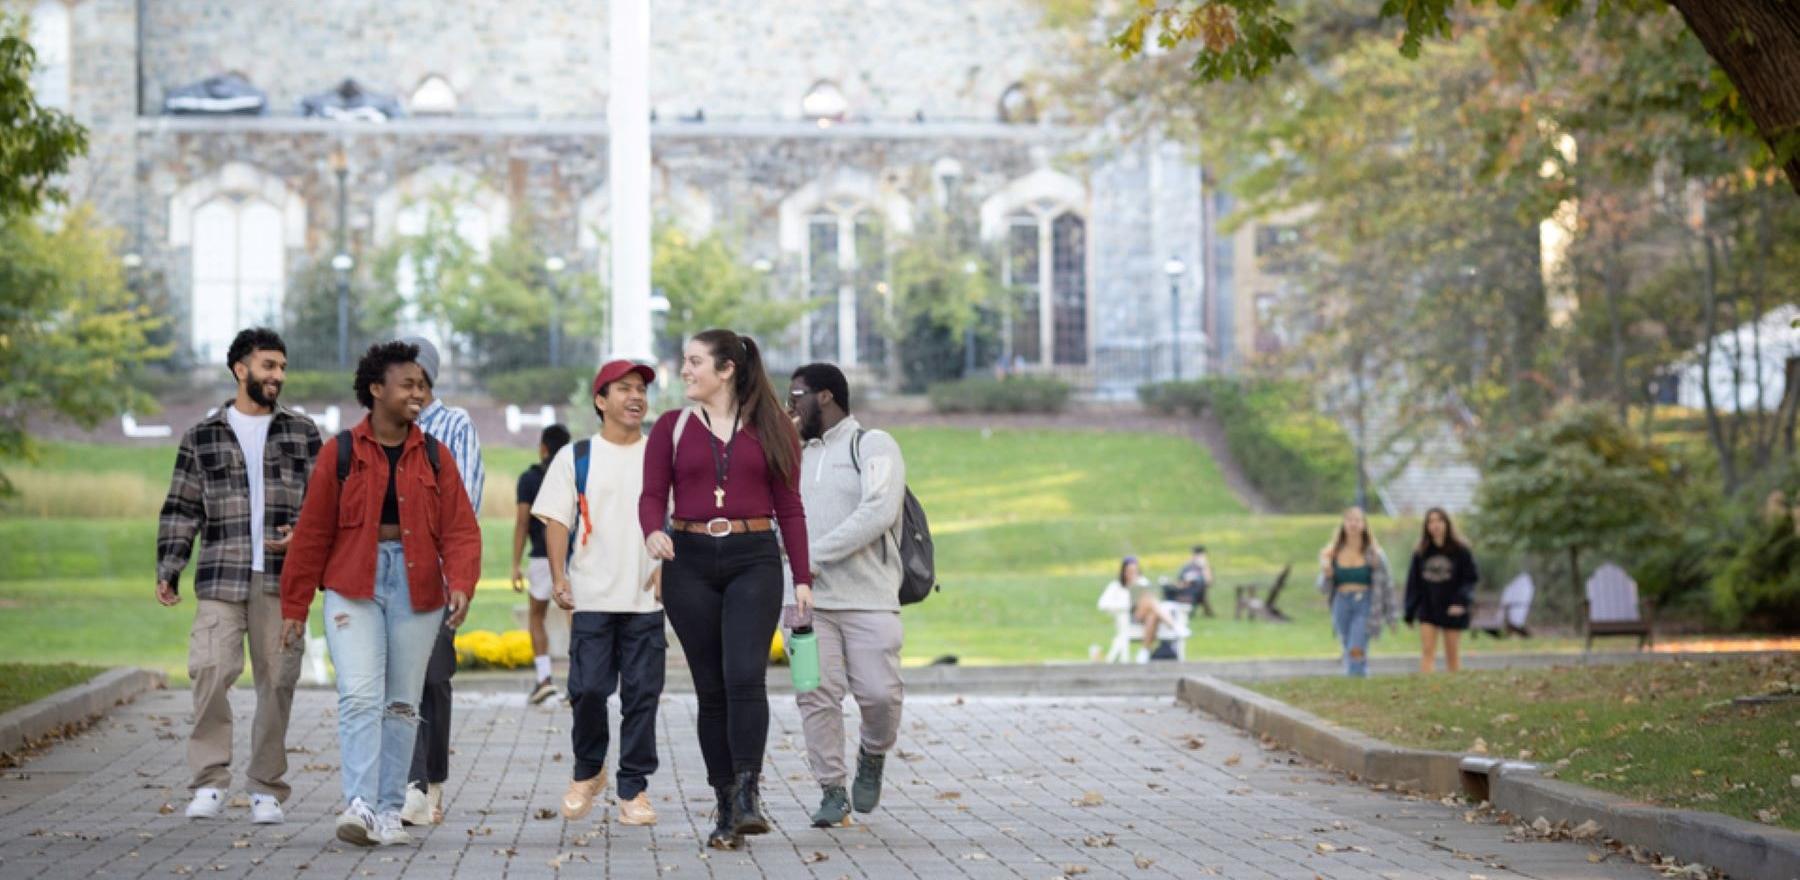 Students walking through Lehigh campus